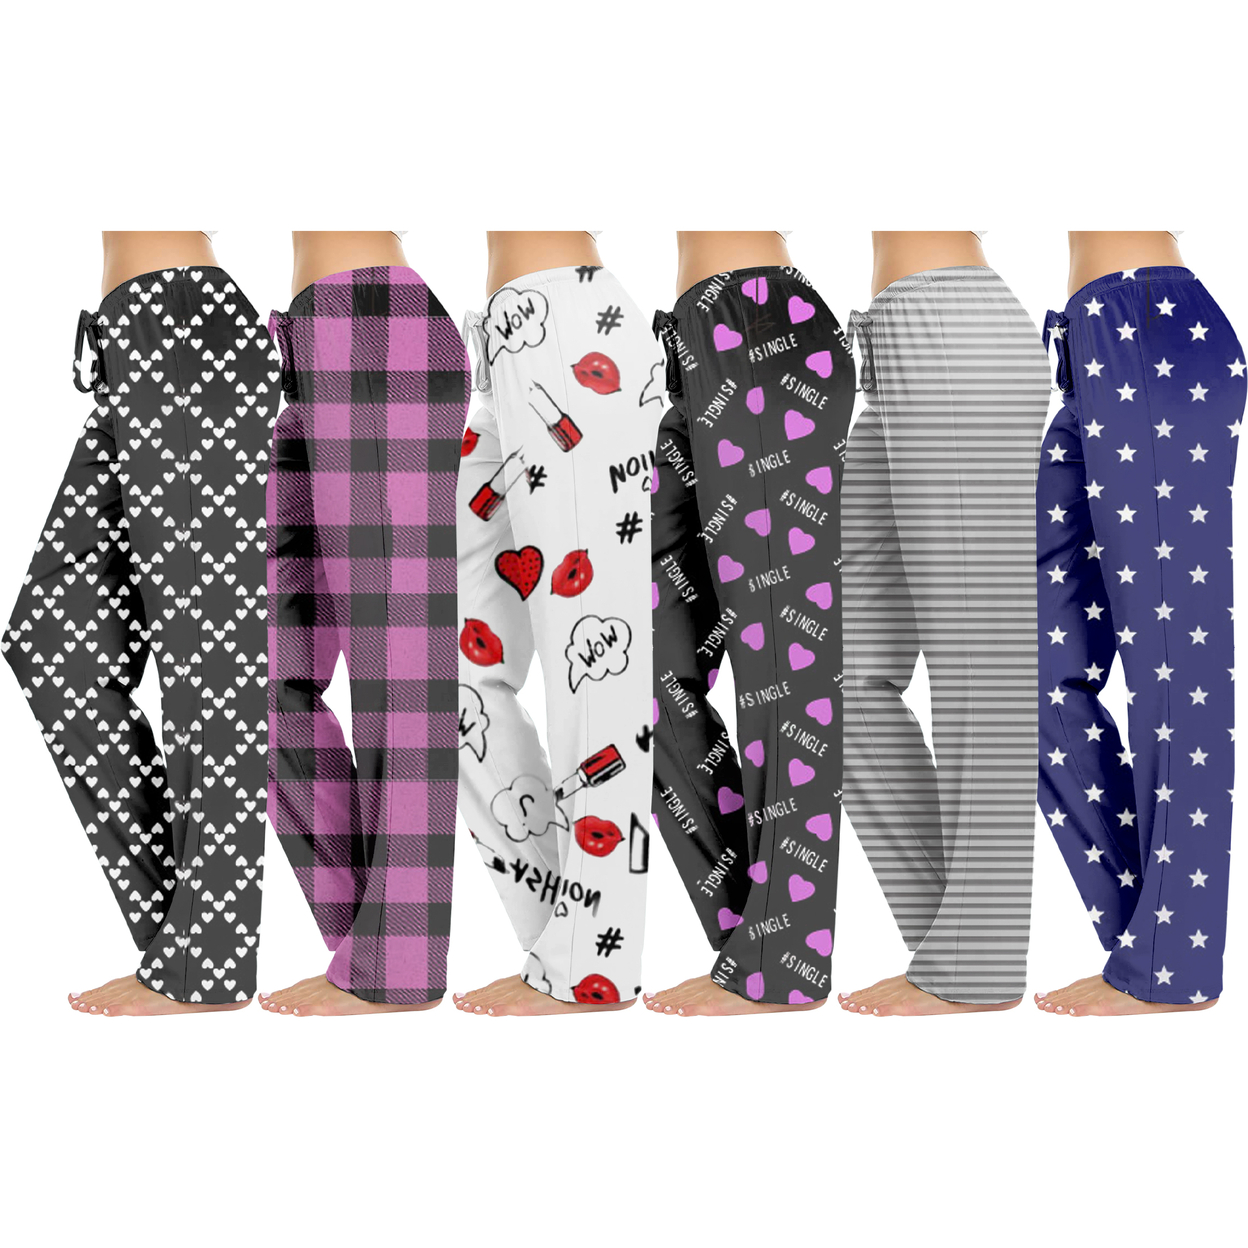 2-Pack: Women's Casual Fun Printed Lightweight Lounge Terry Knit Pajama Bottom Pants - Small, Animal